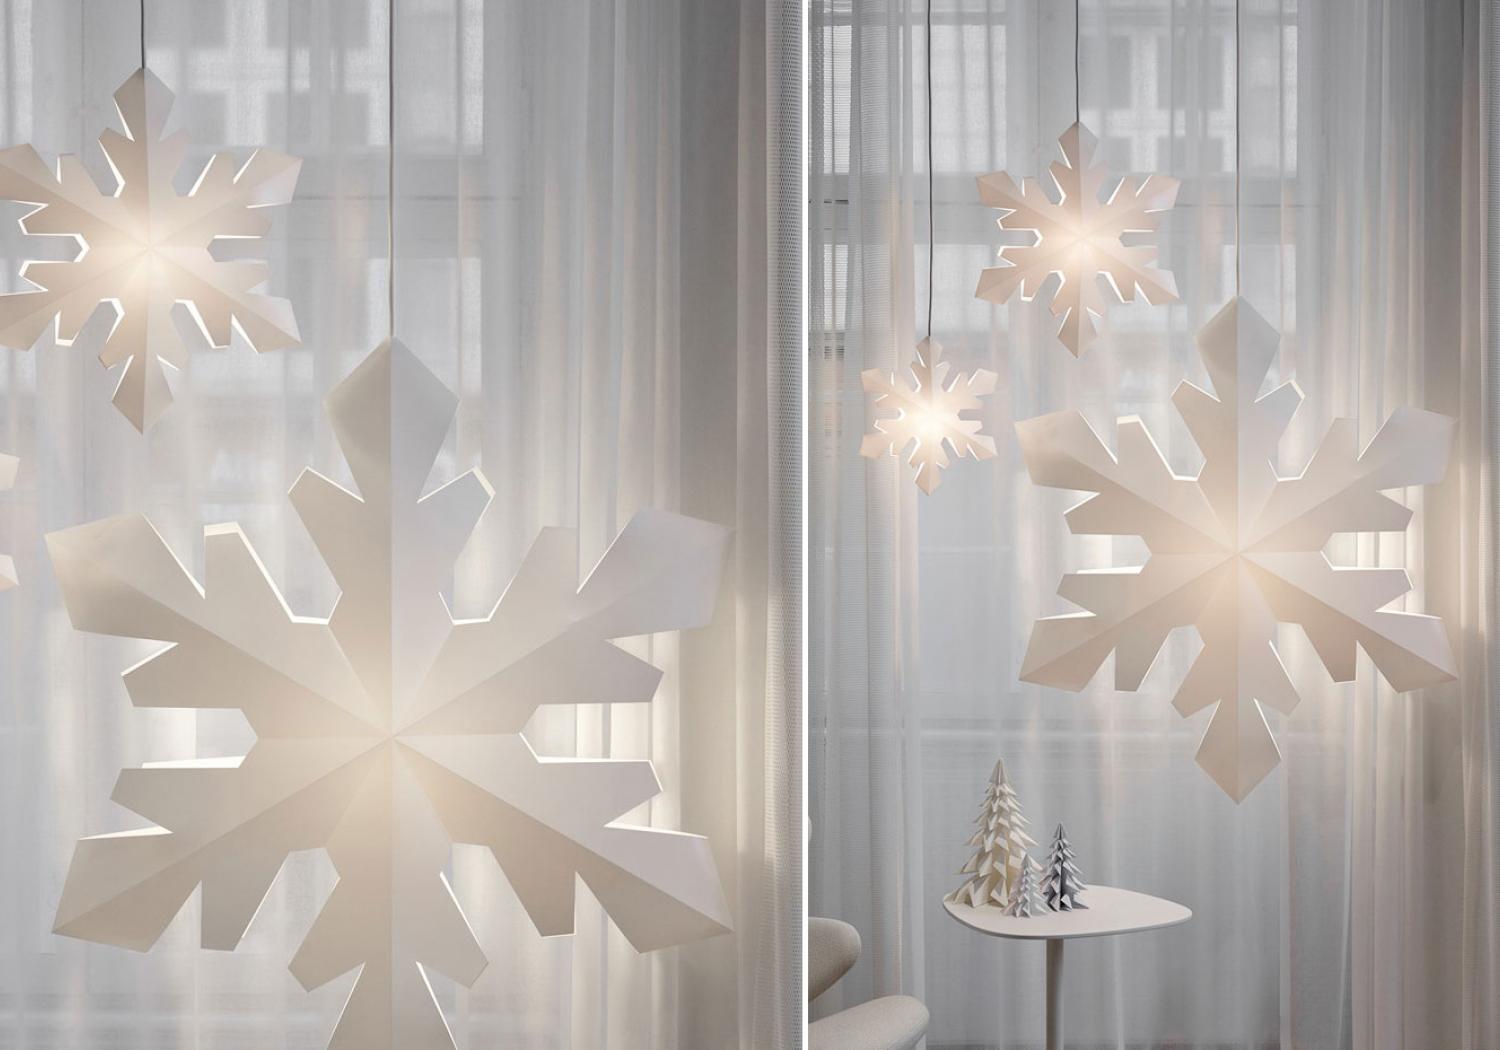 Snowflake Le Klint | The Love & Light Project